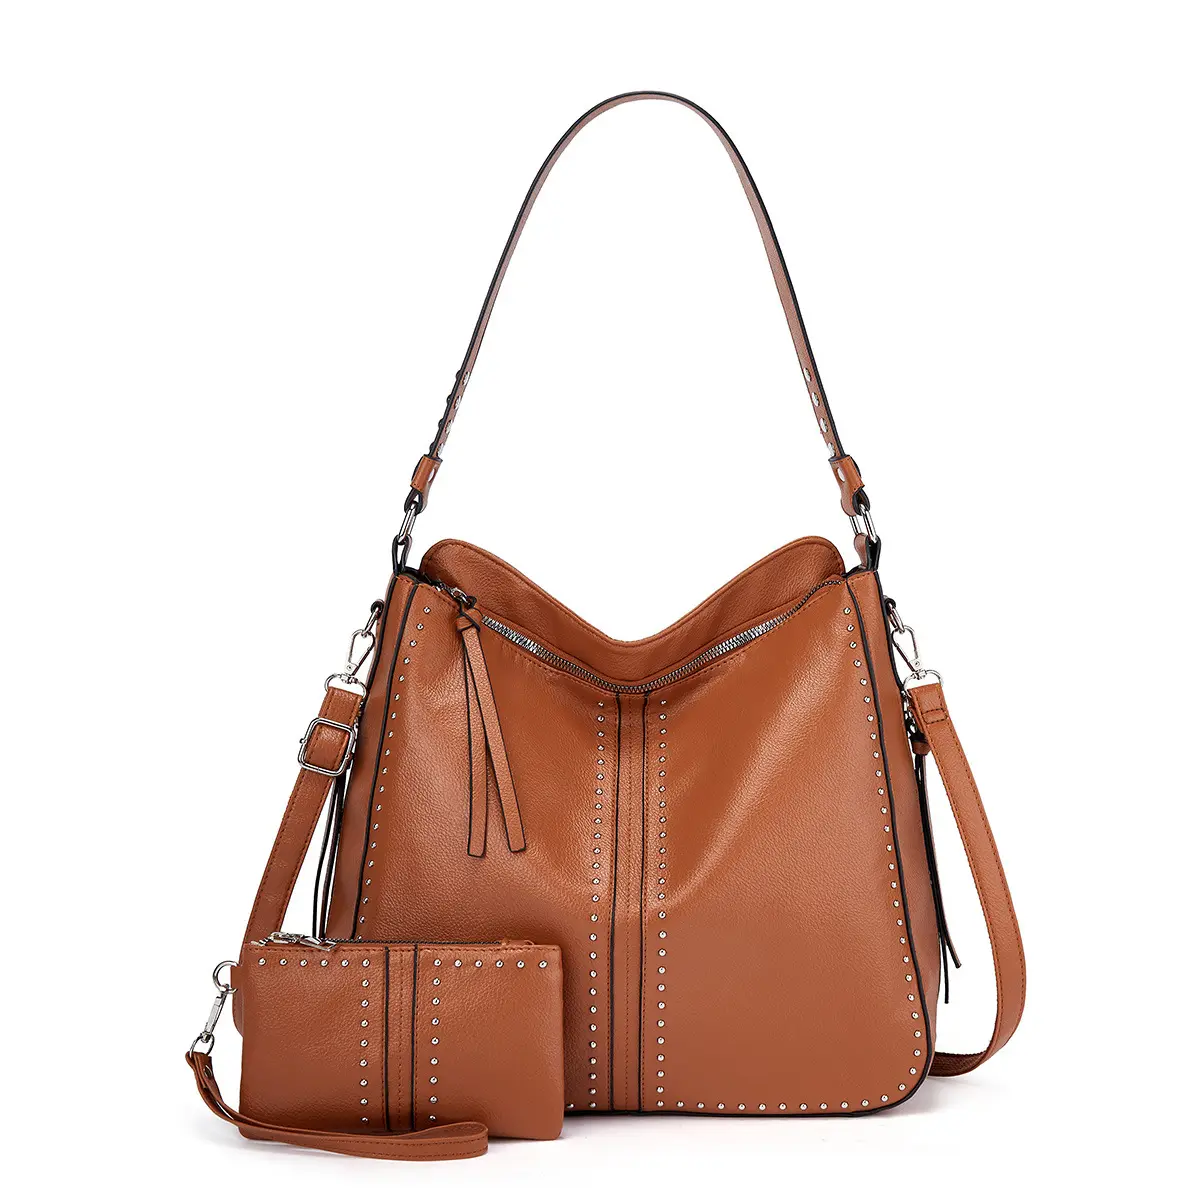 New women's brown bucket bags pu leather handbag set single shoulder messenger bag satchel crossbody rivet ladies tote hobo bag